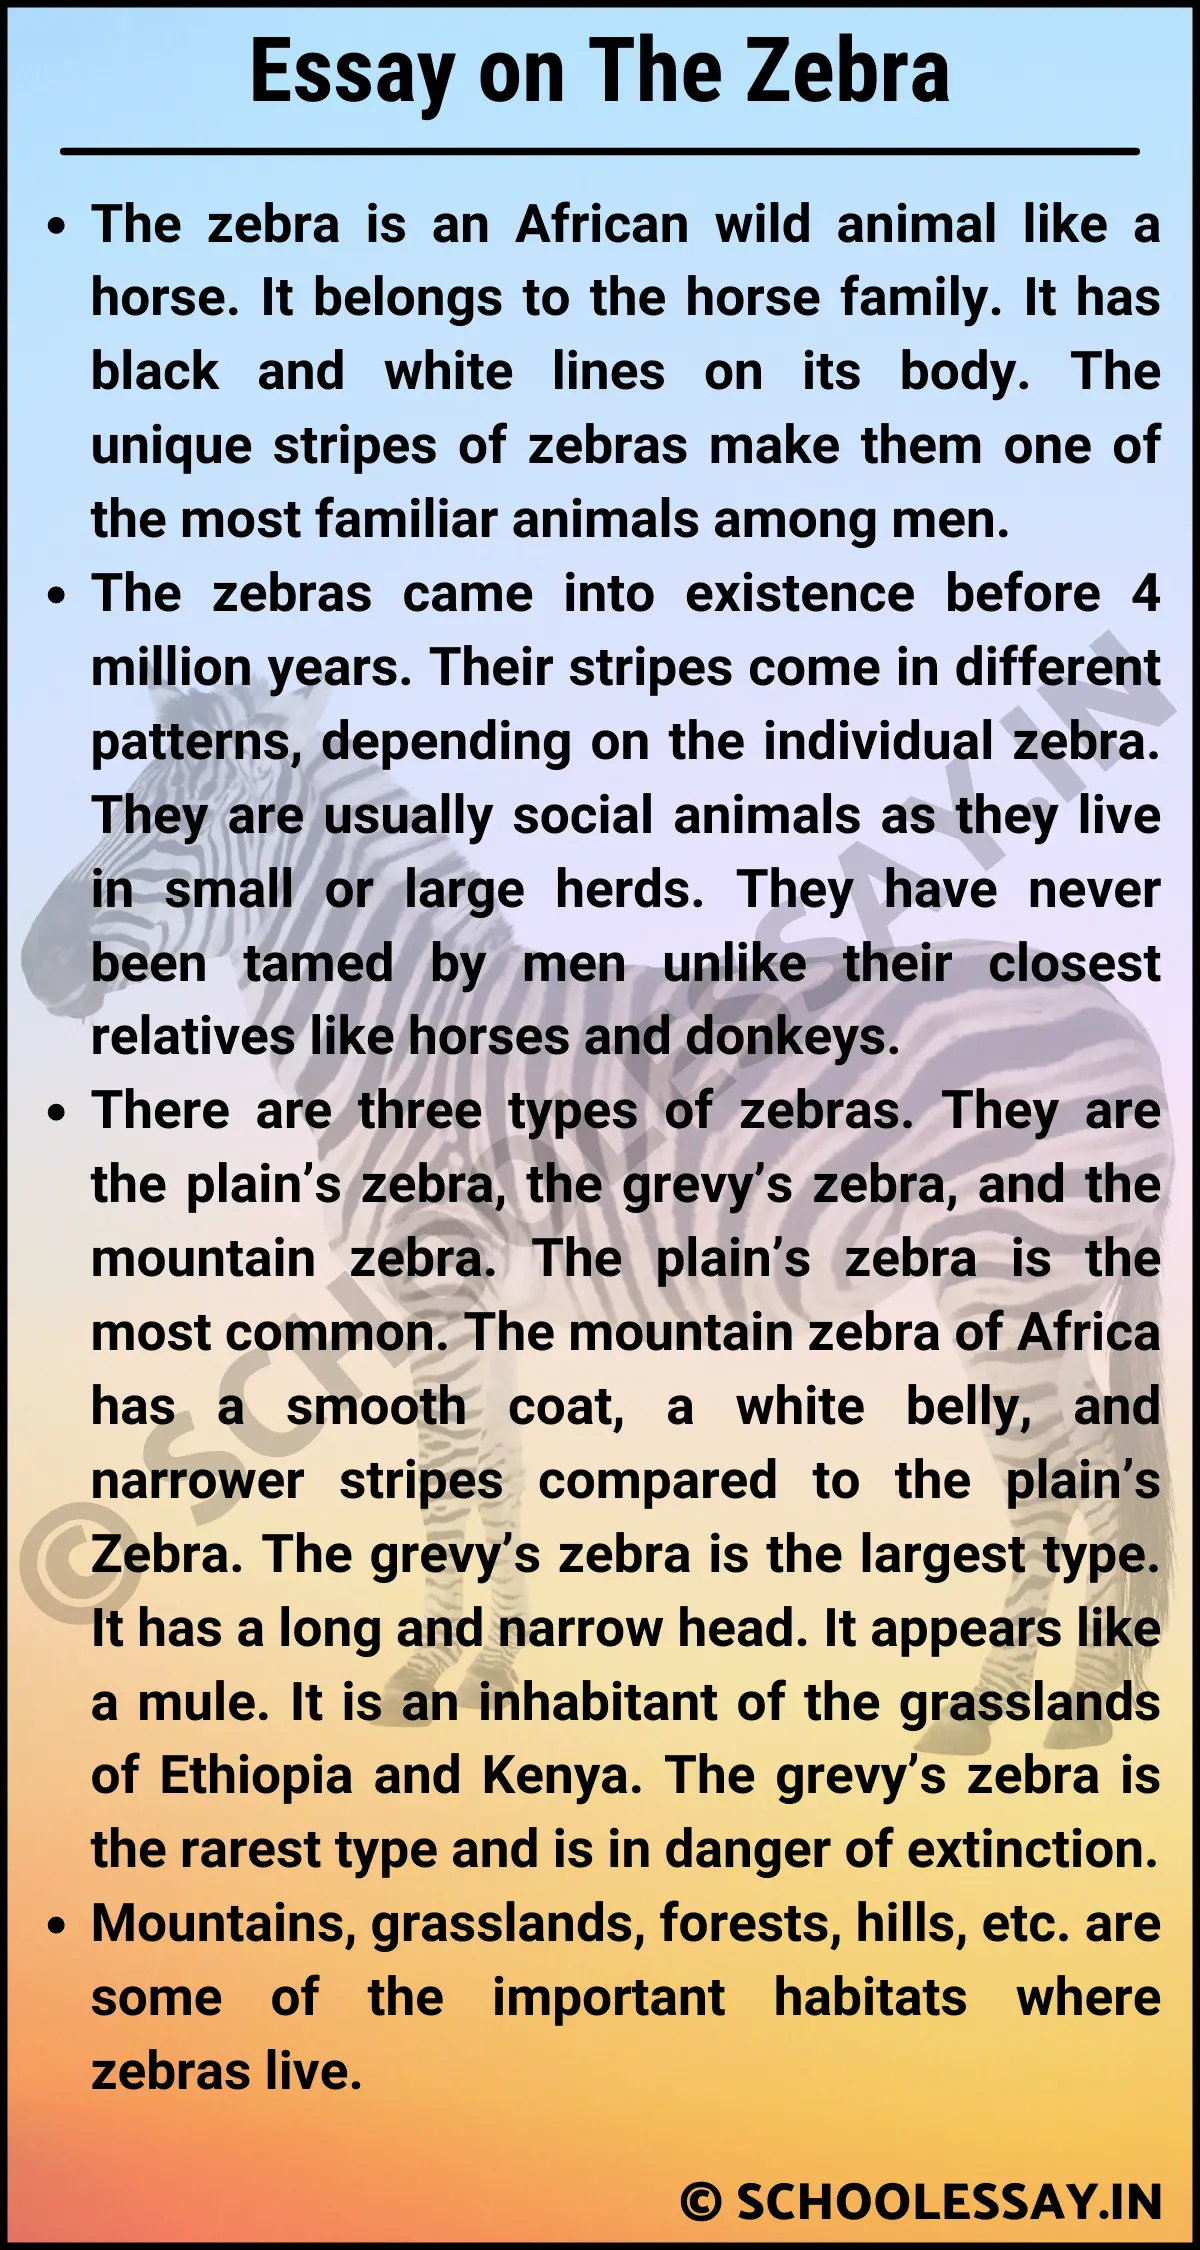 Essay on The Zebra